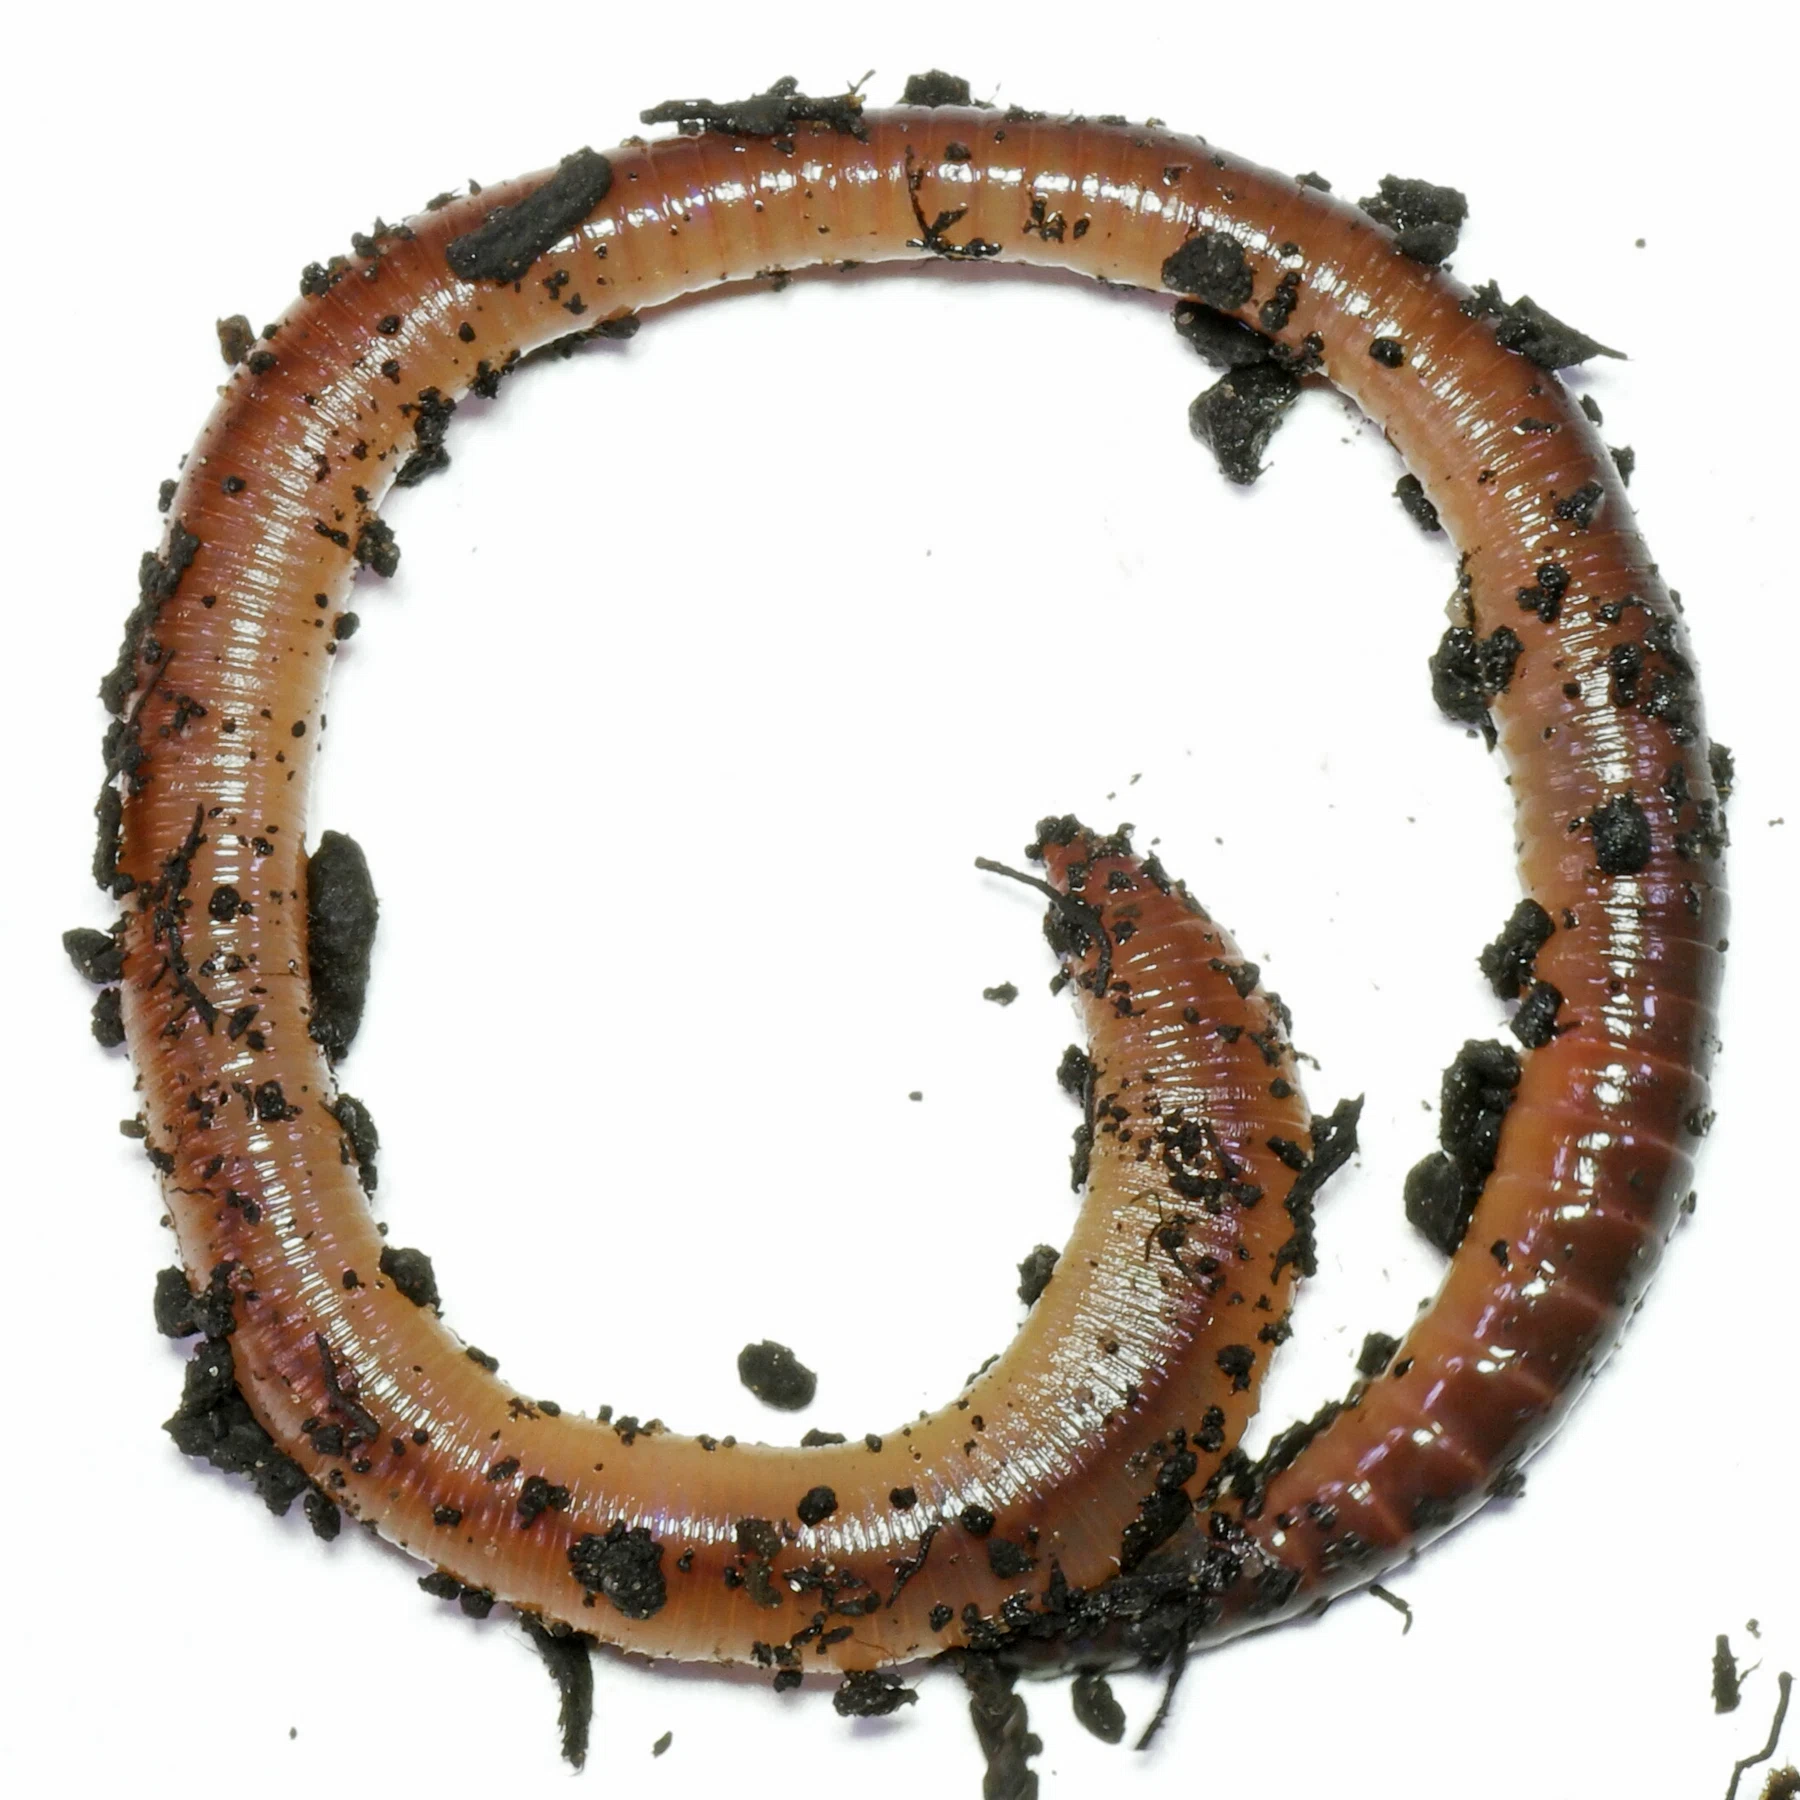 Common Earthworm Lumbricus terrestris